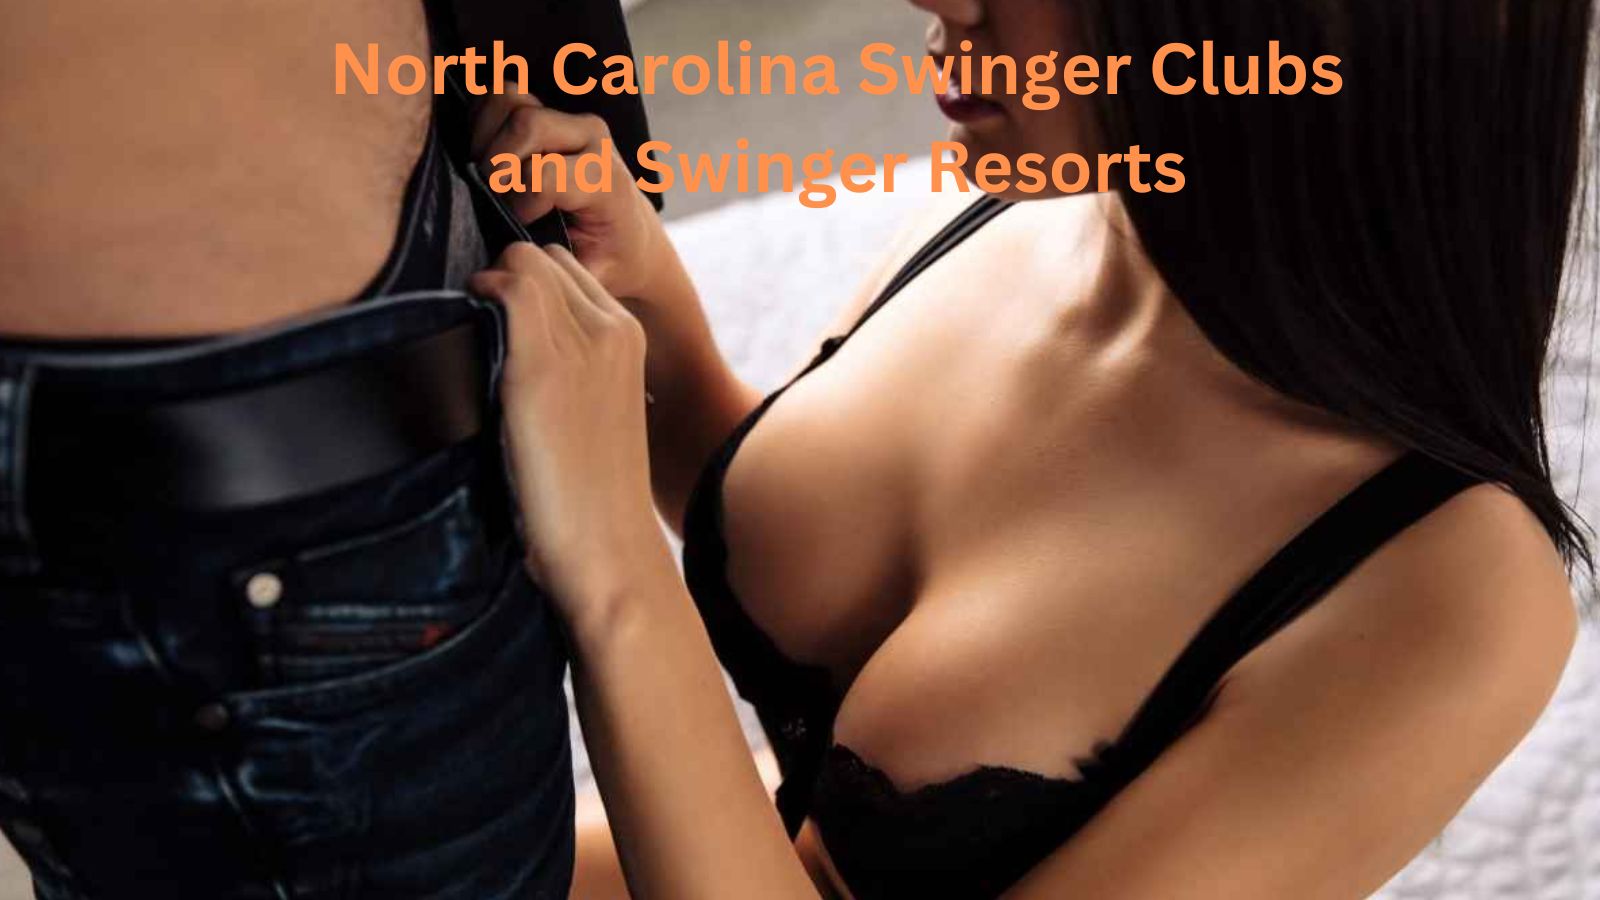 2023 North Carolina Swinger Clubs and Resorts: Top fun swinger spots